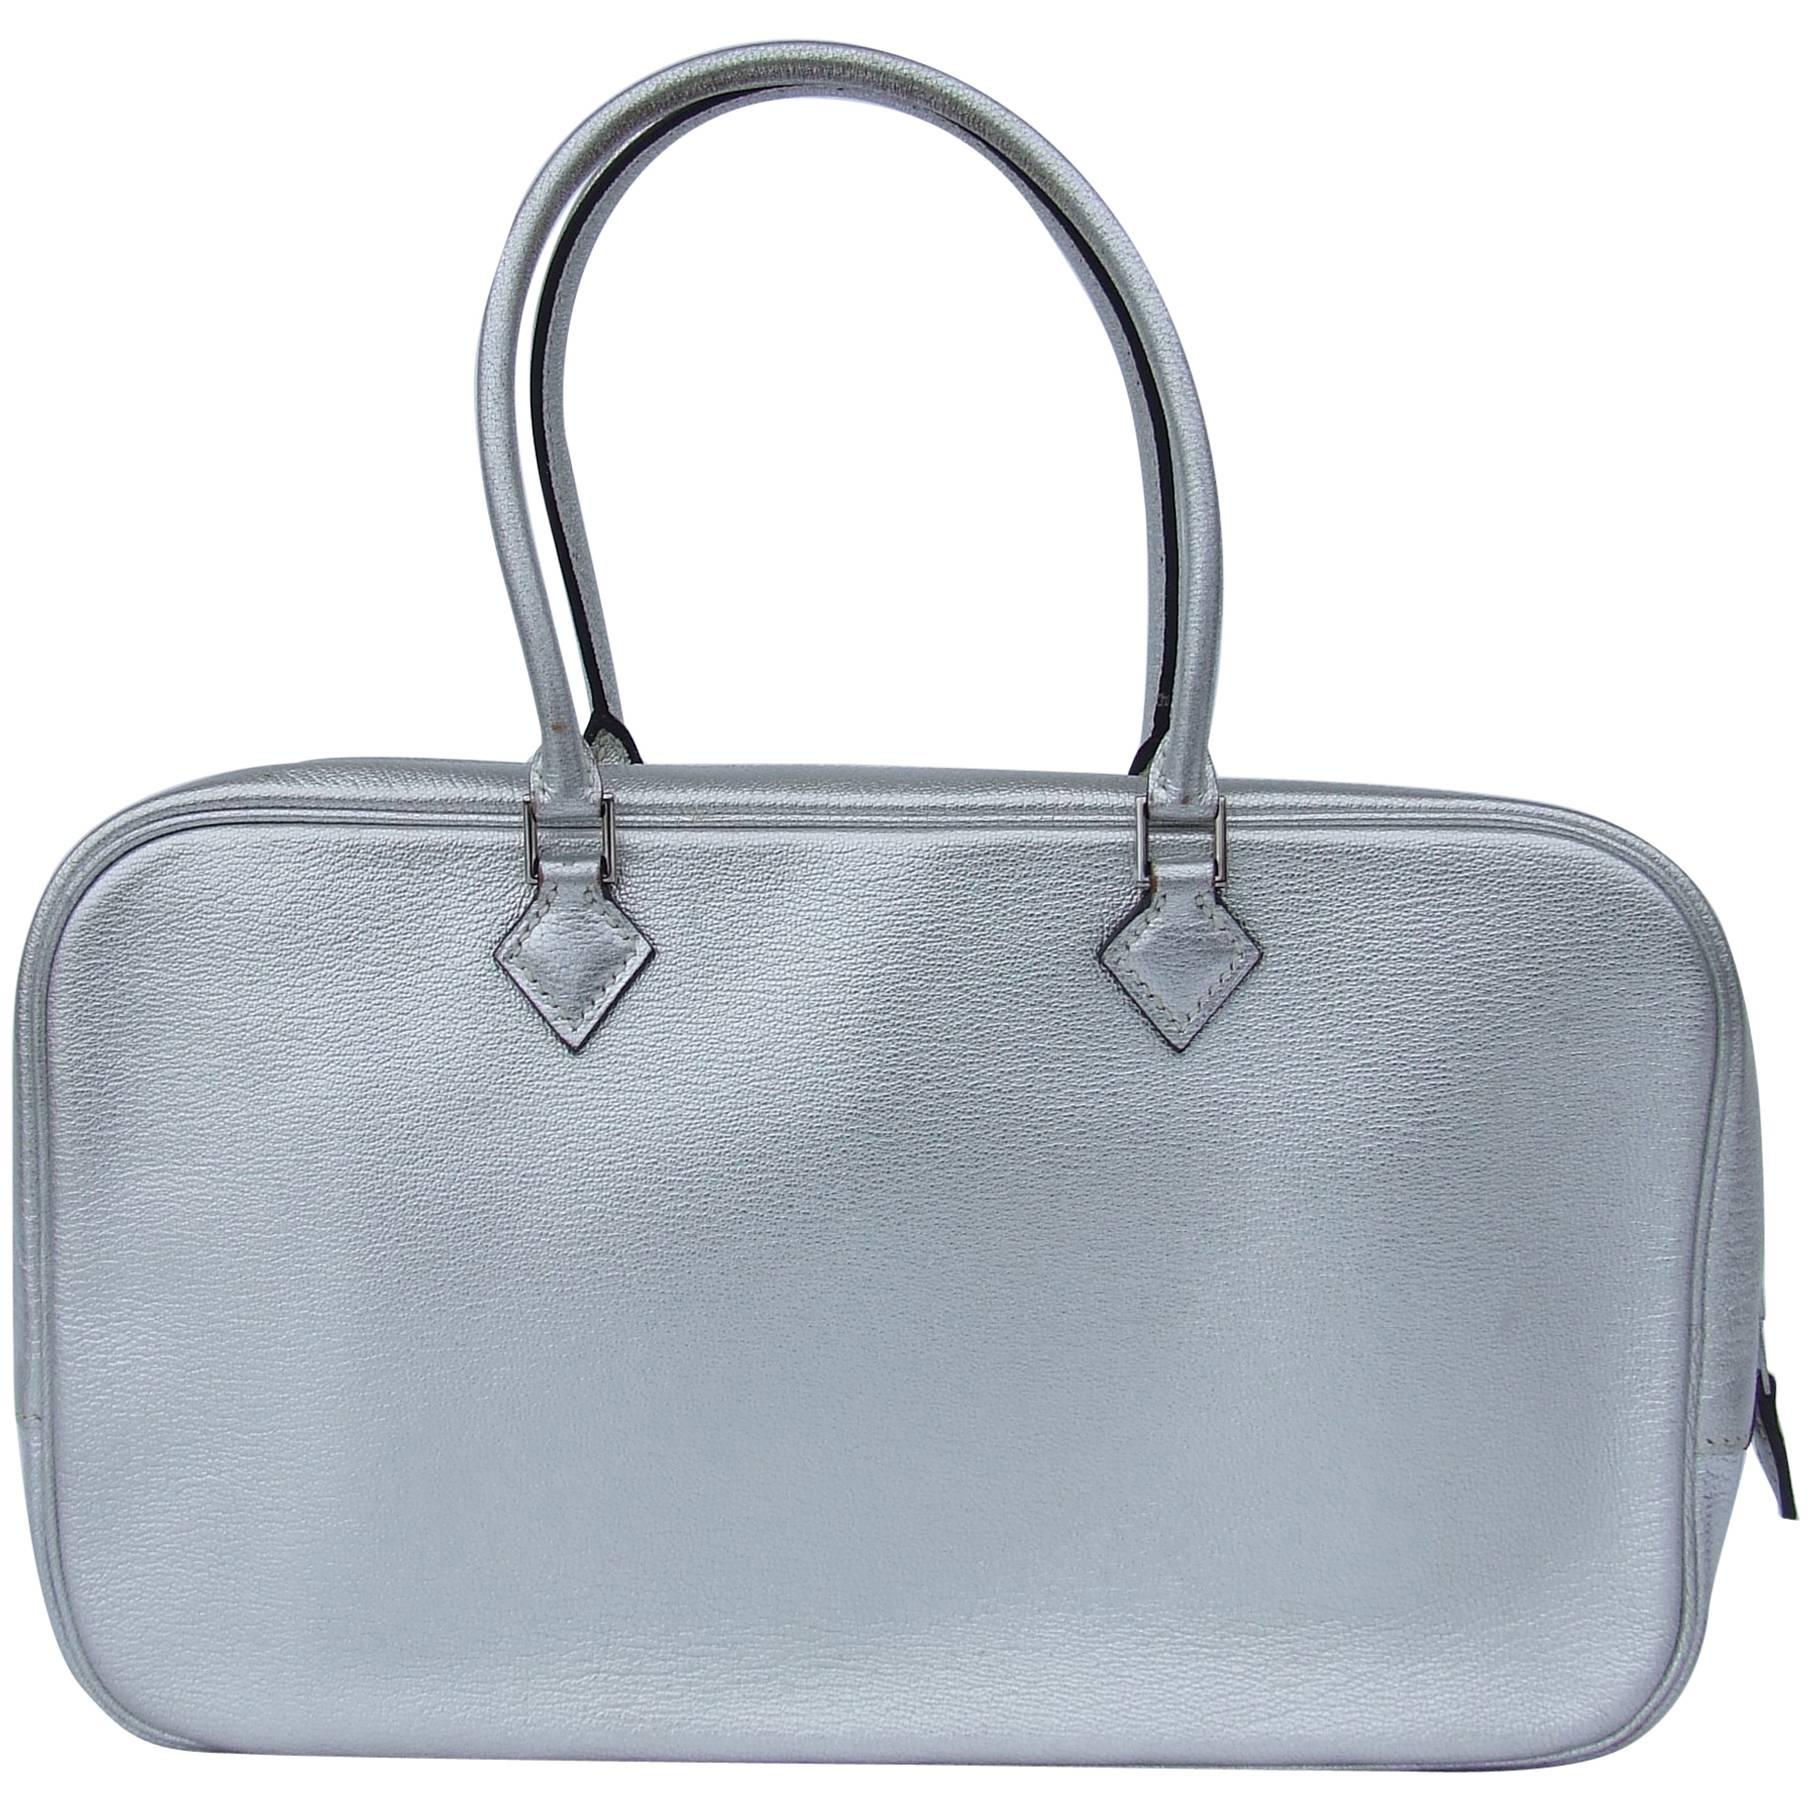 Hermès Limited Edition Metallic Silver Chevre Leather Plume Elan Bag PHW 28 cm